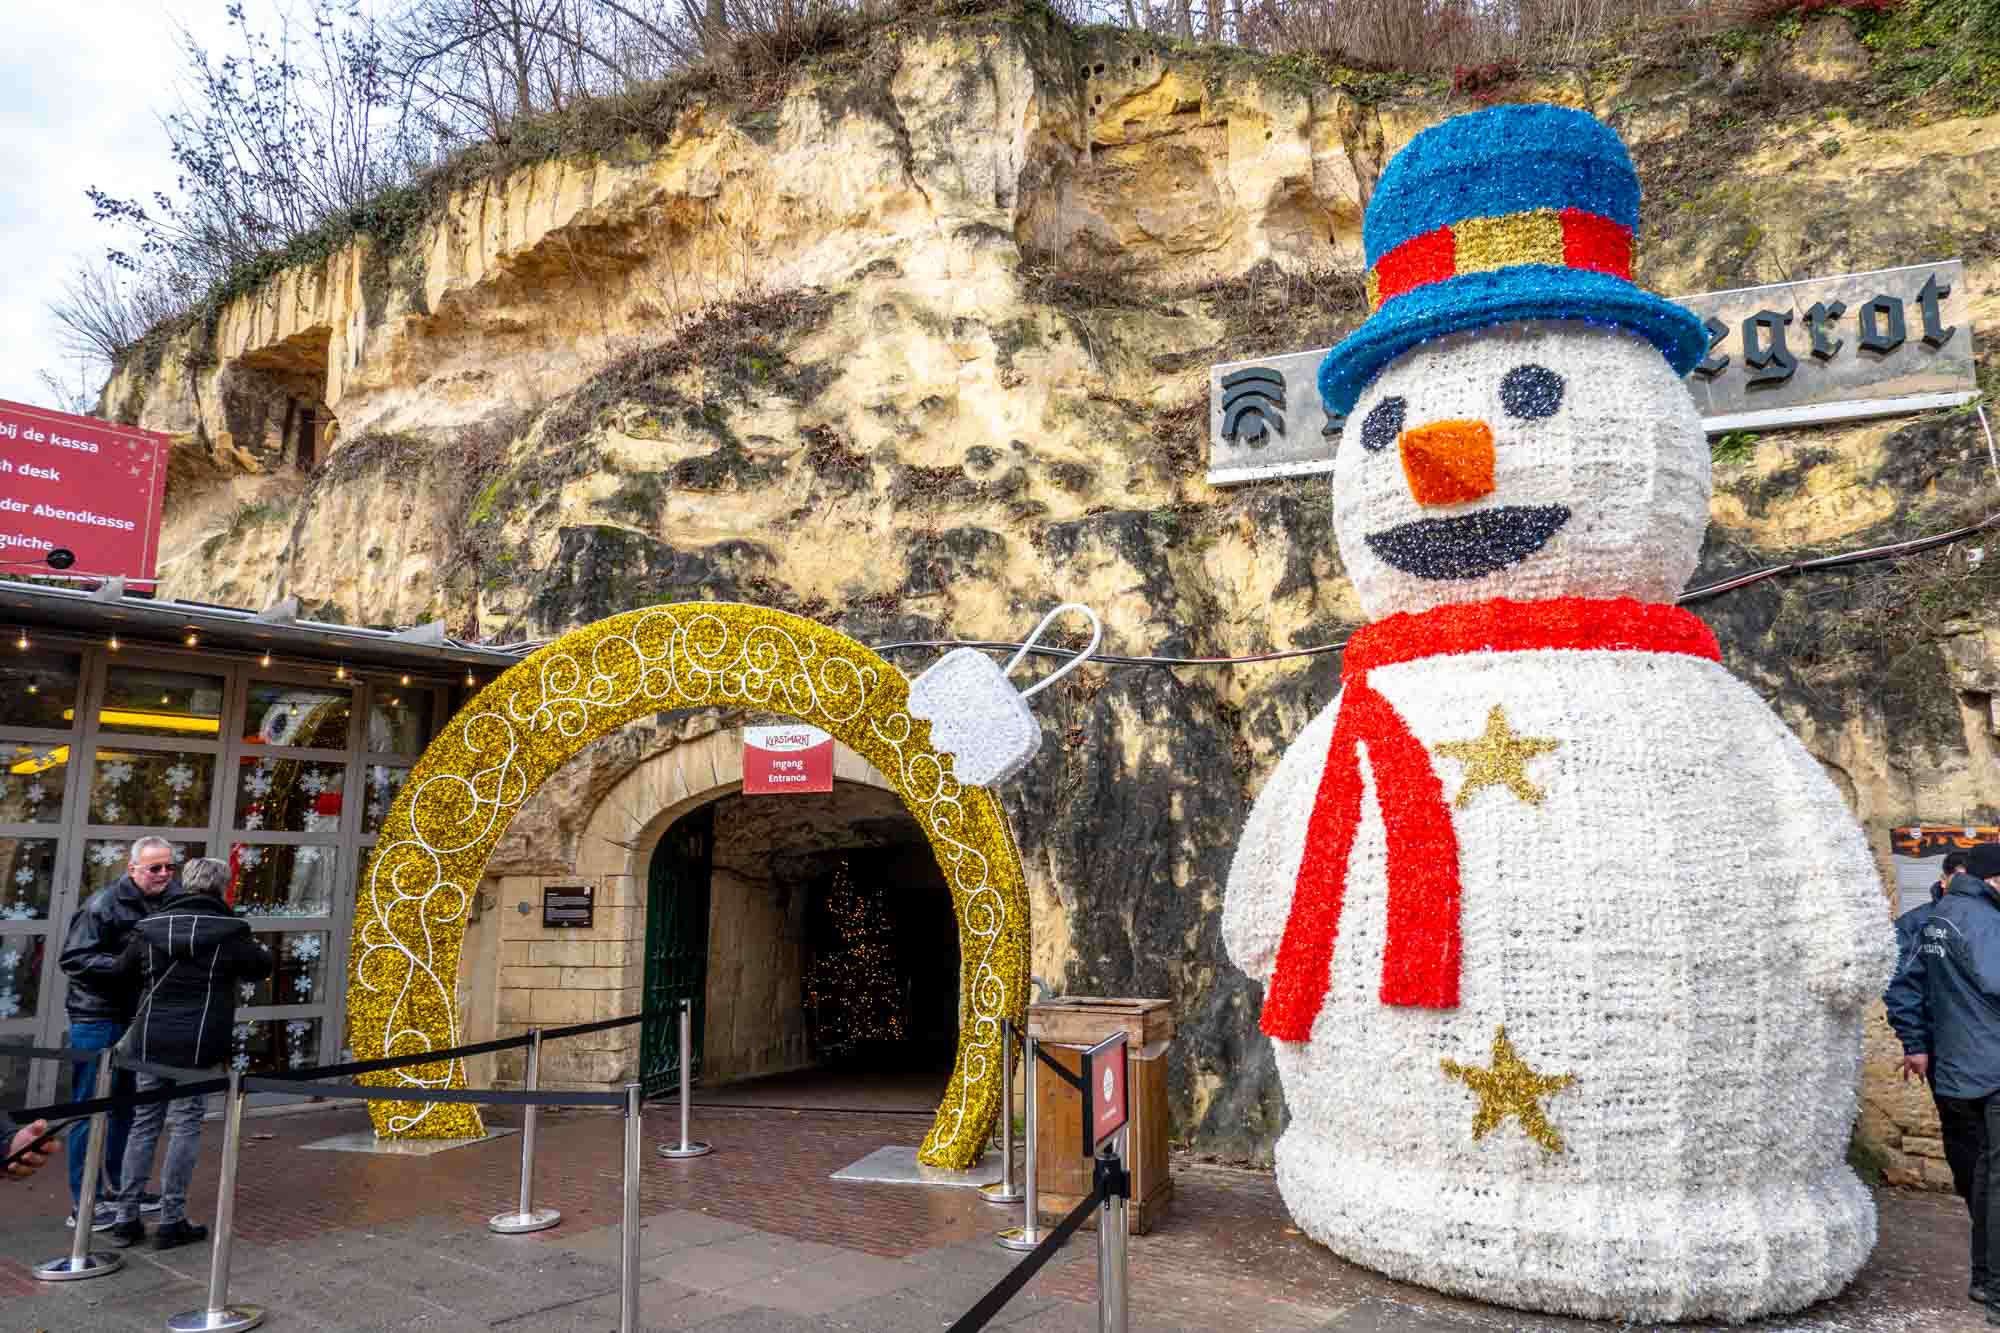 Snowman sculpture outside the entrance of a cave.